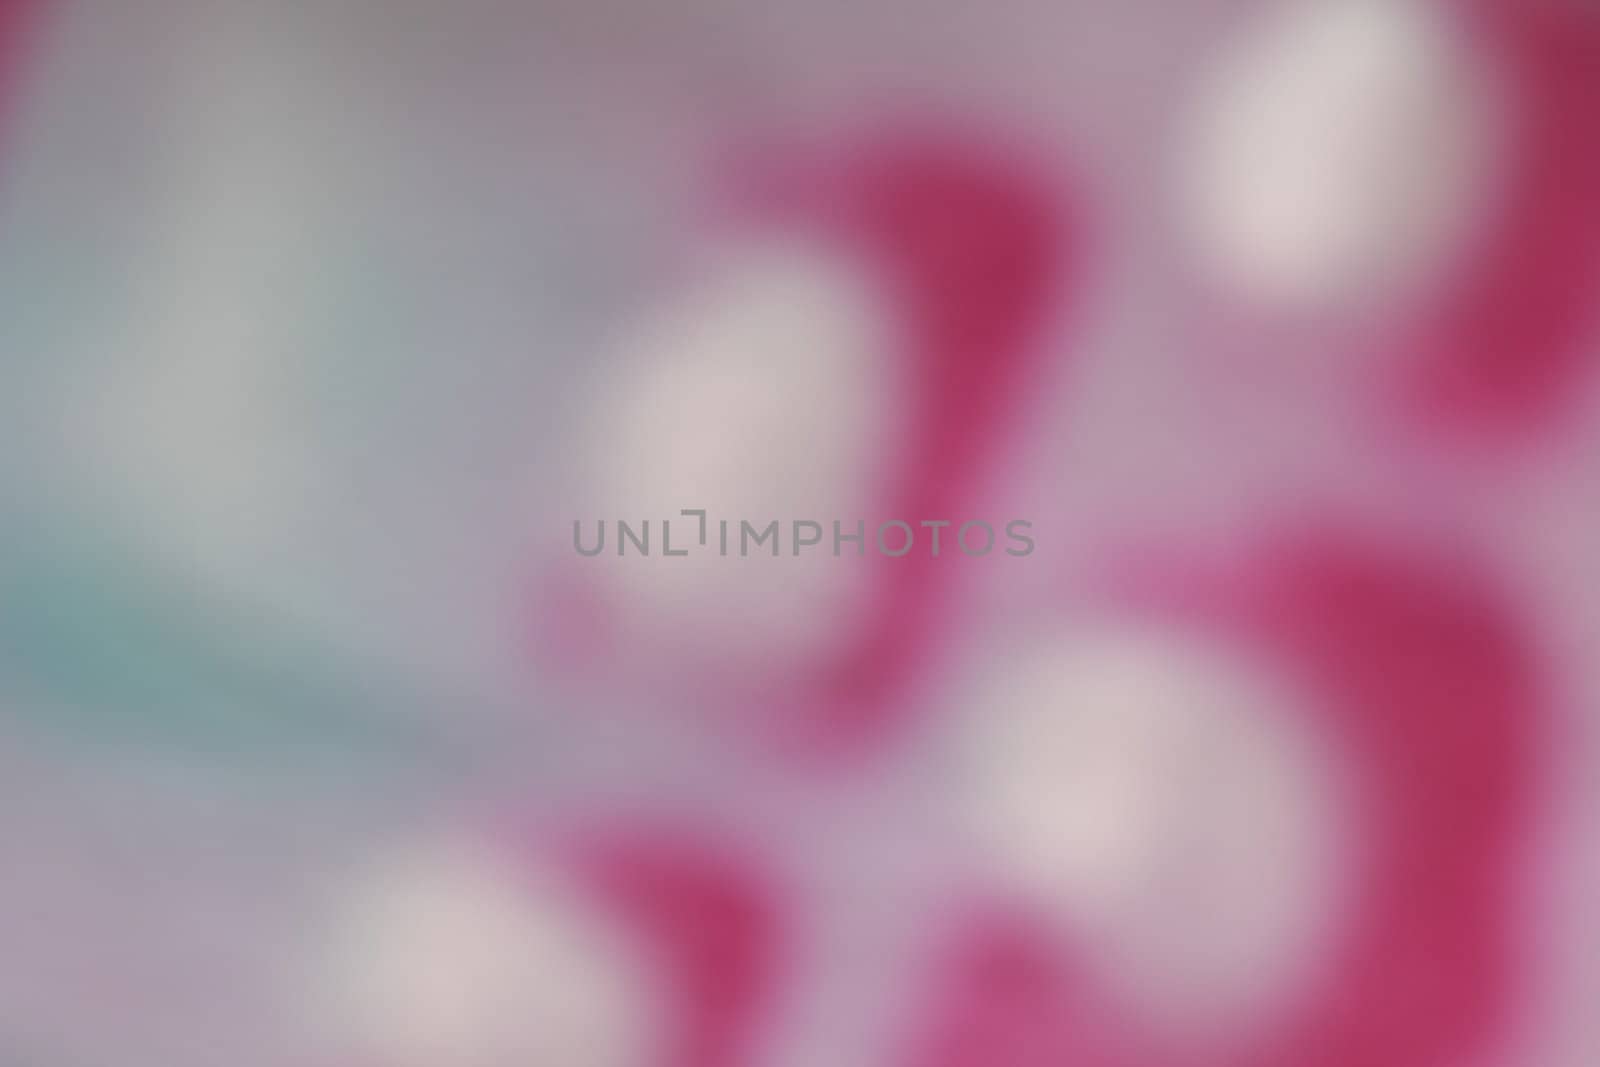 Blurry pinkish/reddish background